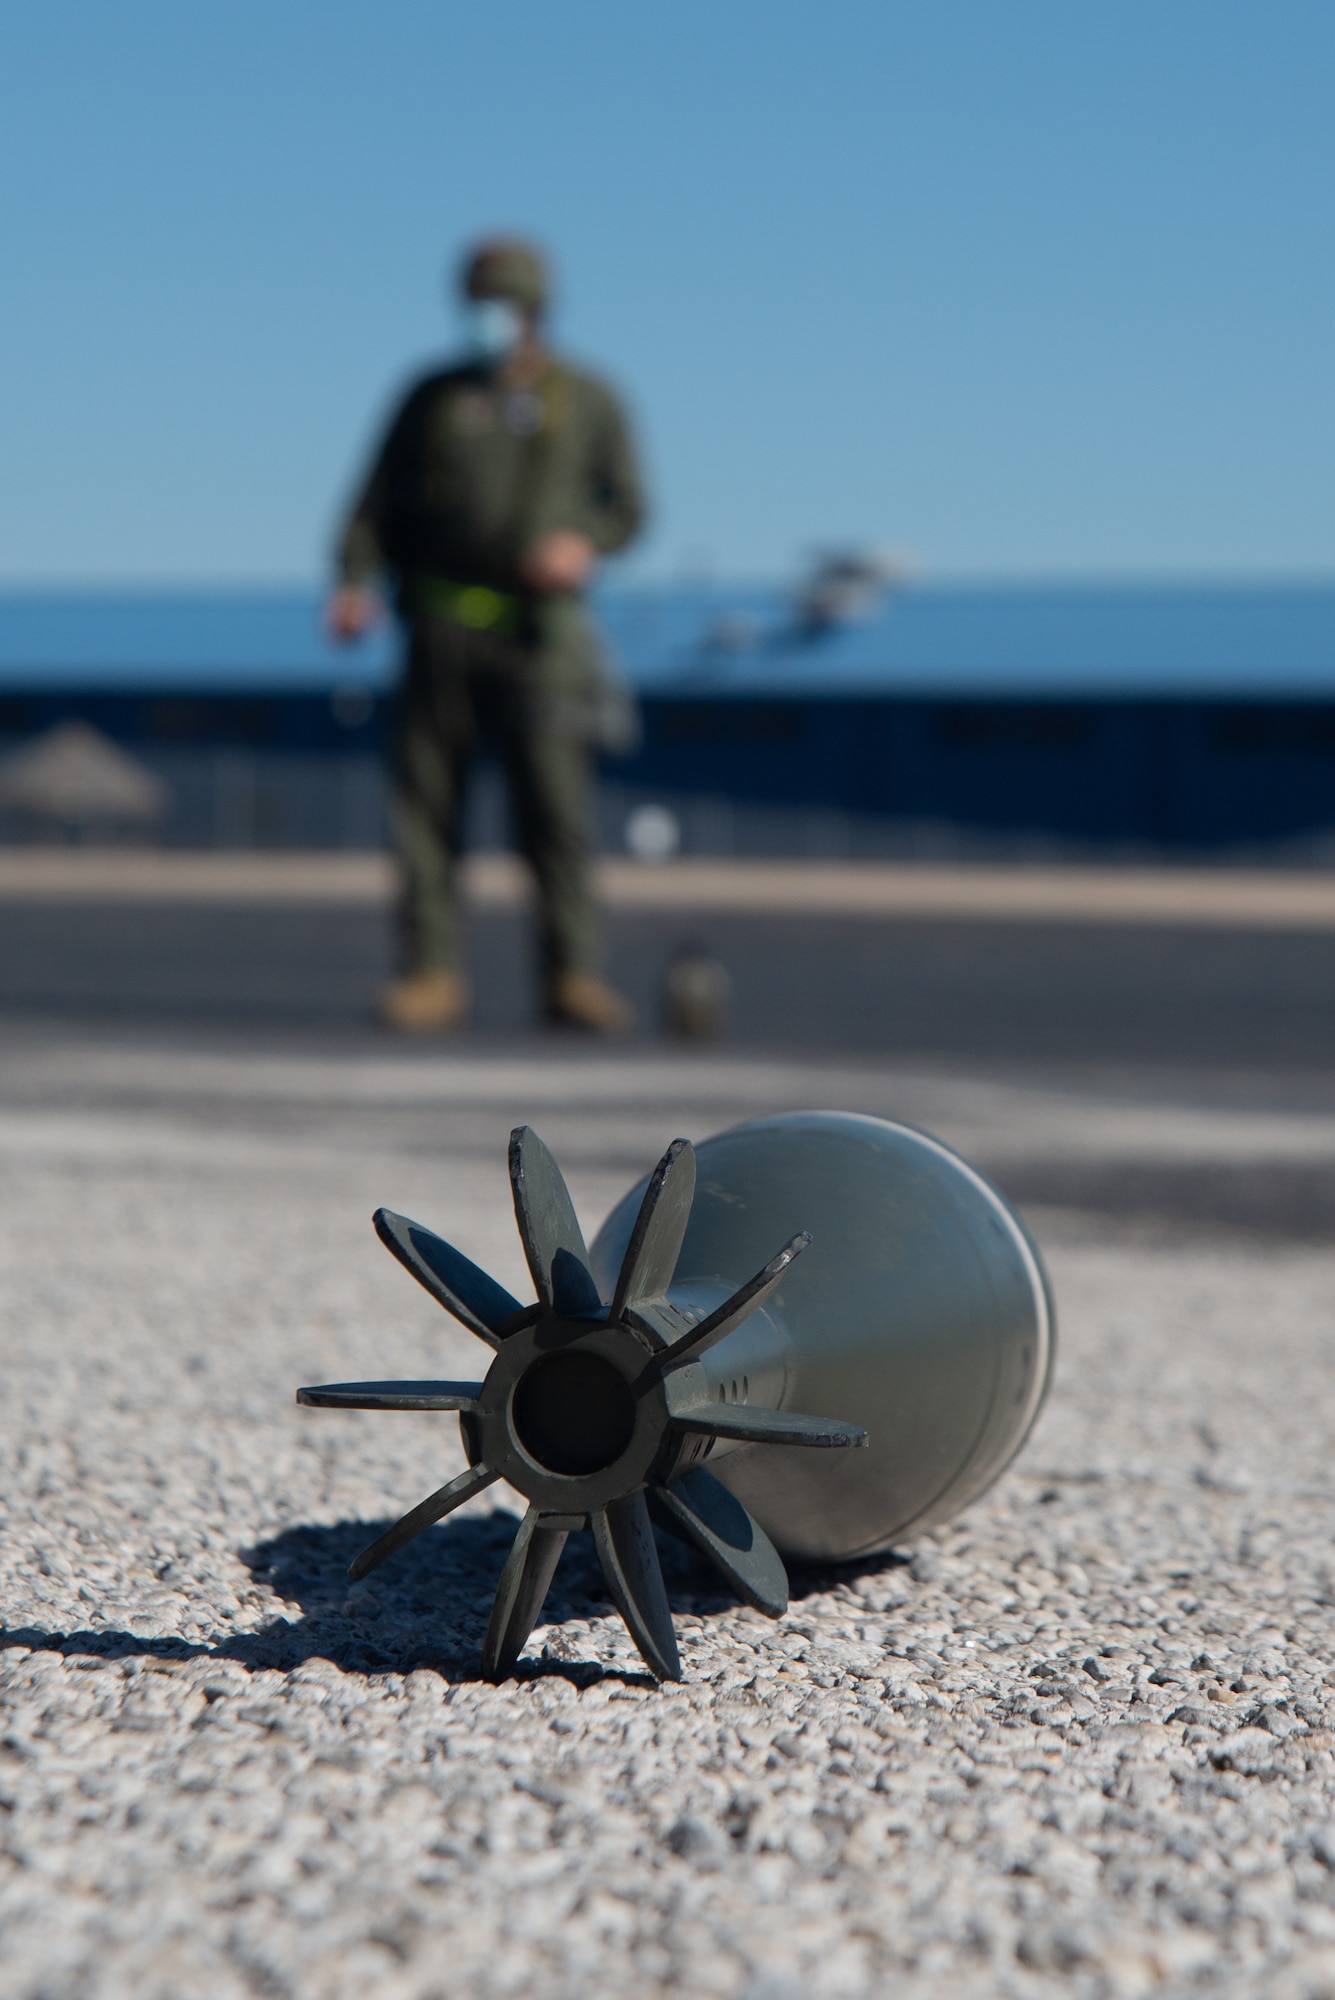 Airman guards an artificial UXO during a Post-Attack Reconnaissance sweep.